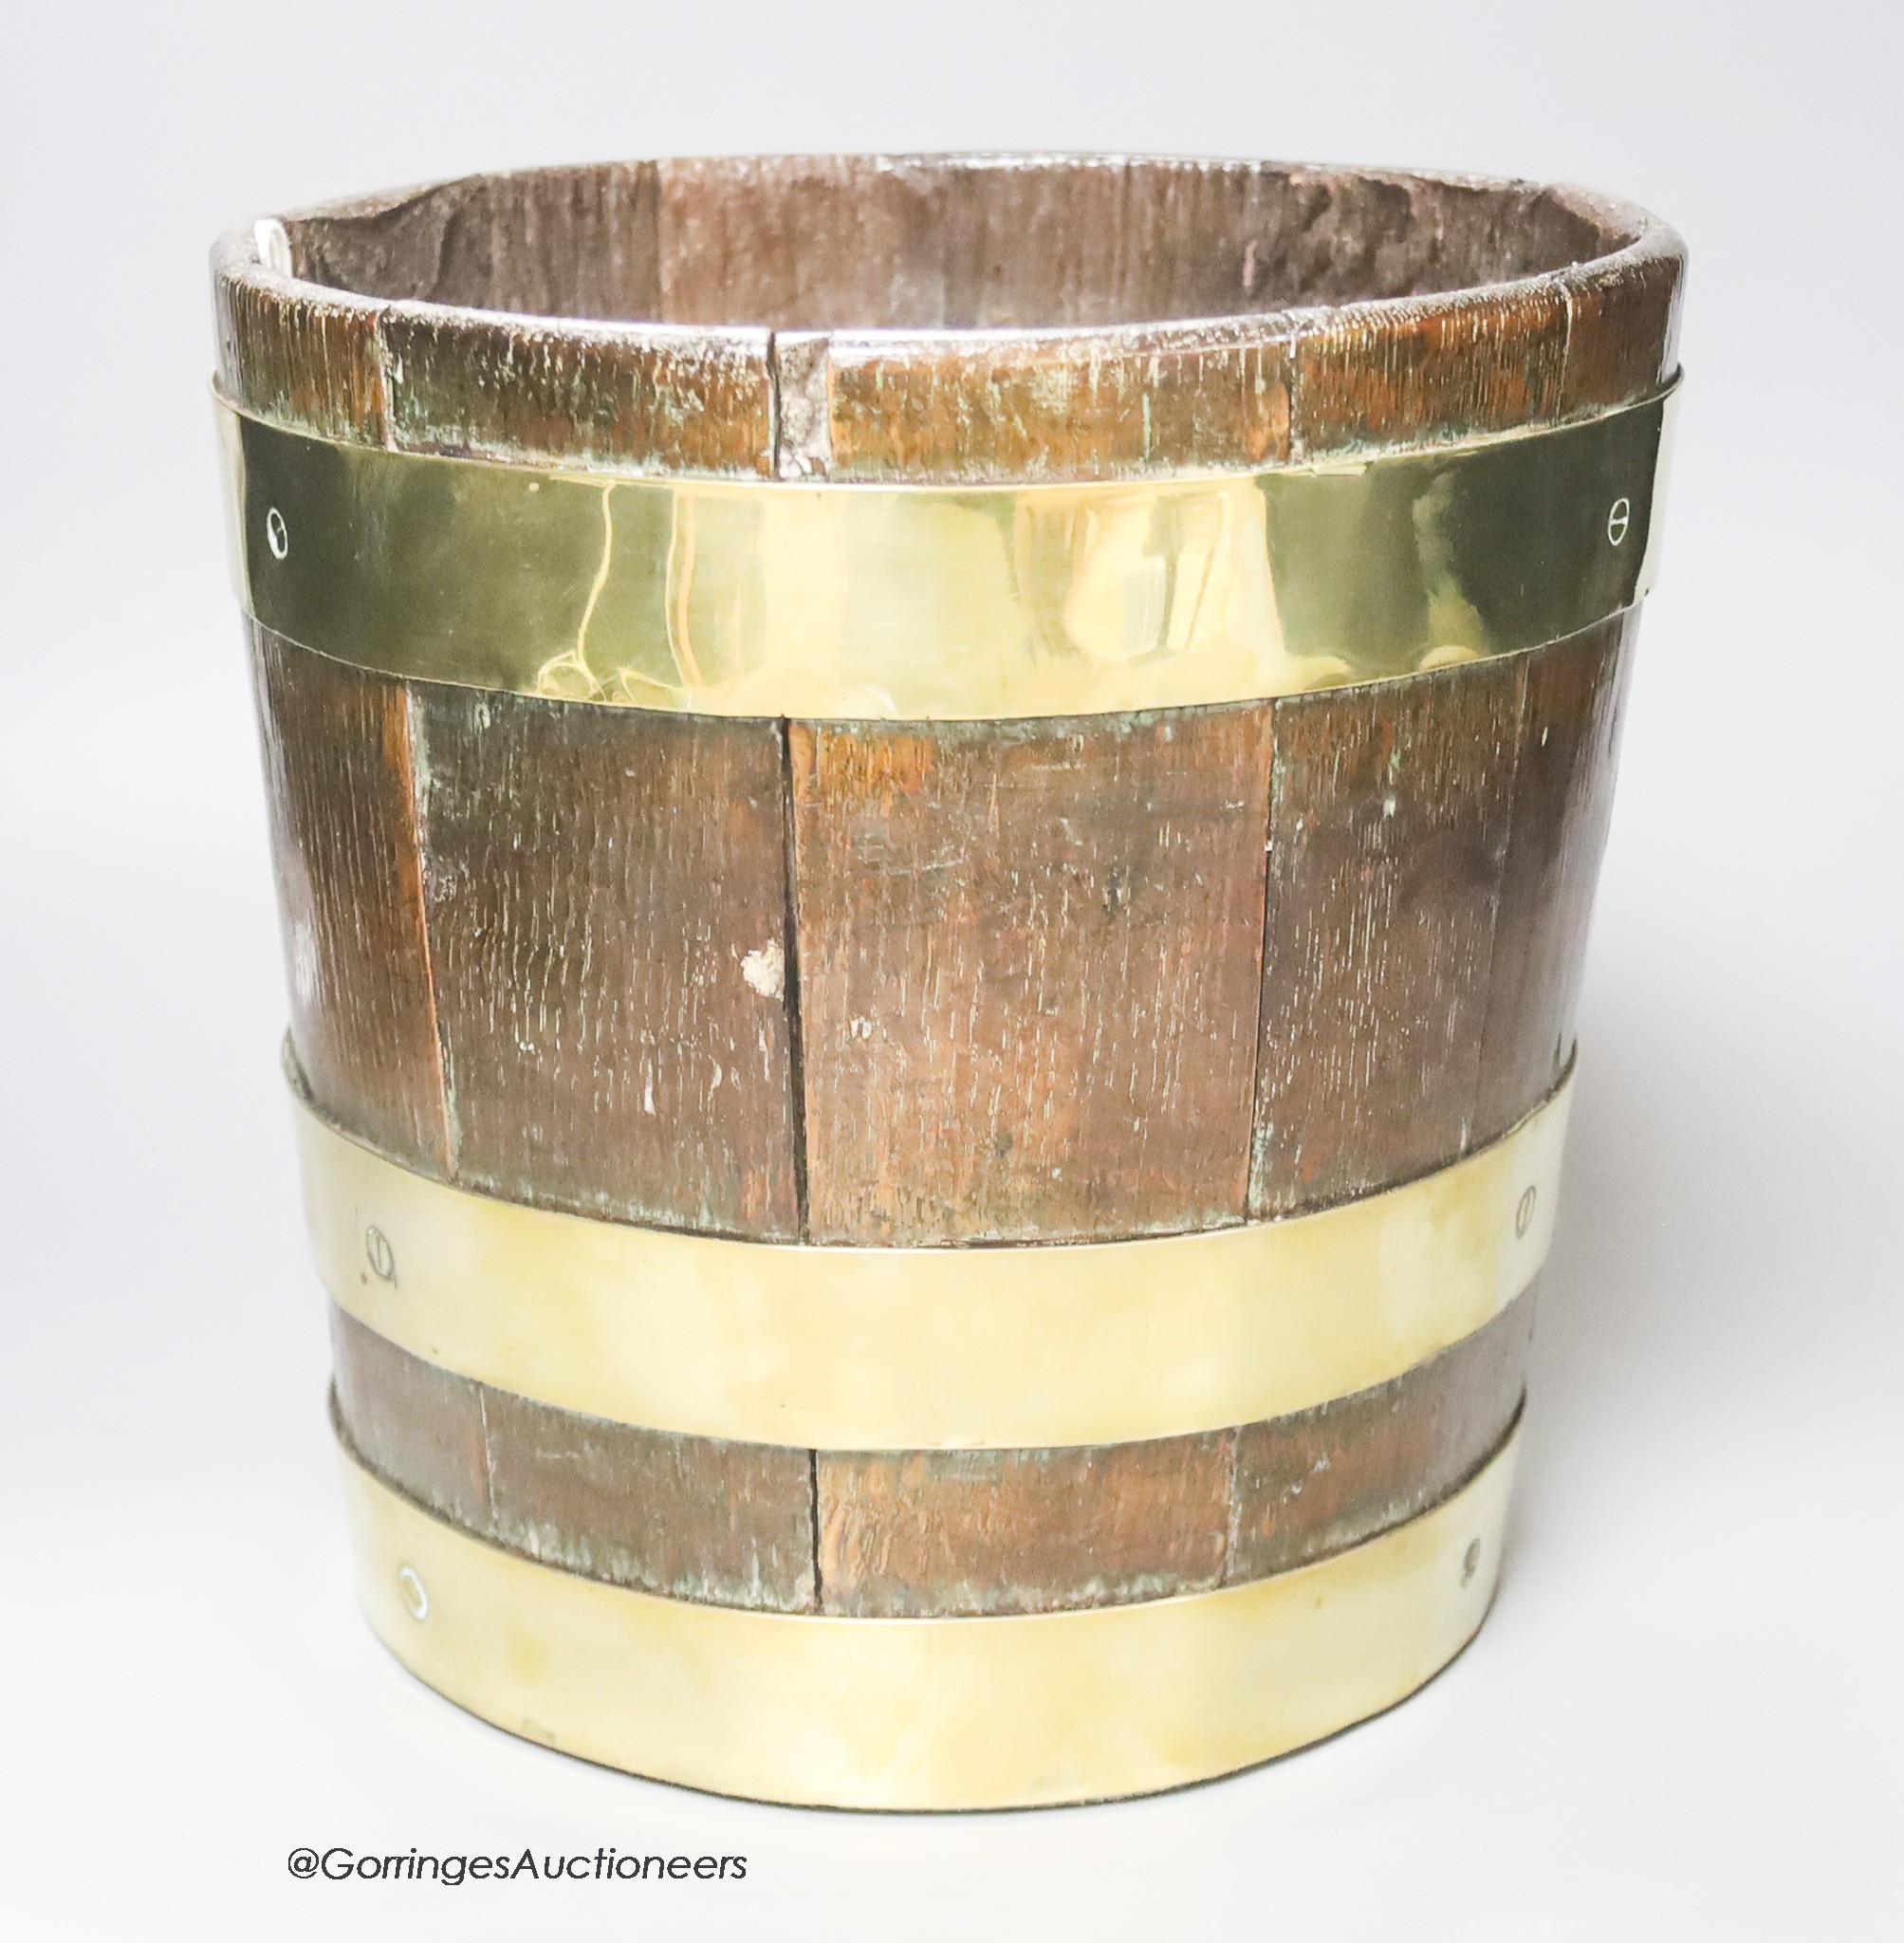 An 18th century brass-bound oak peat bucket, height 23cm